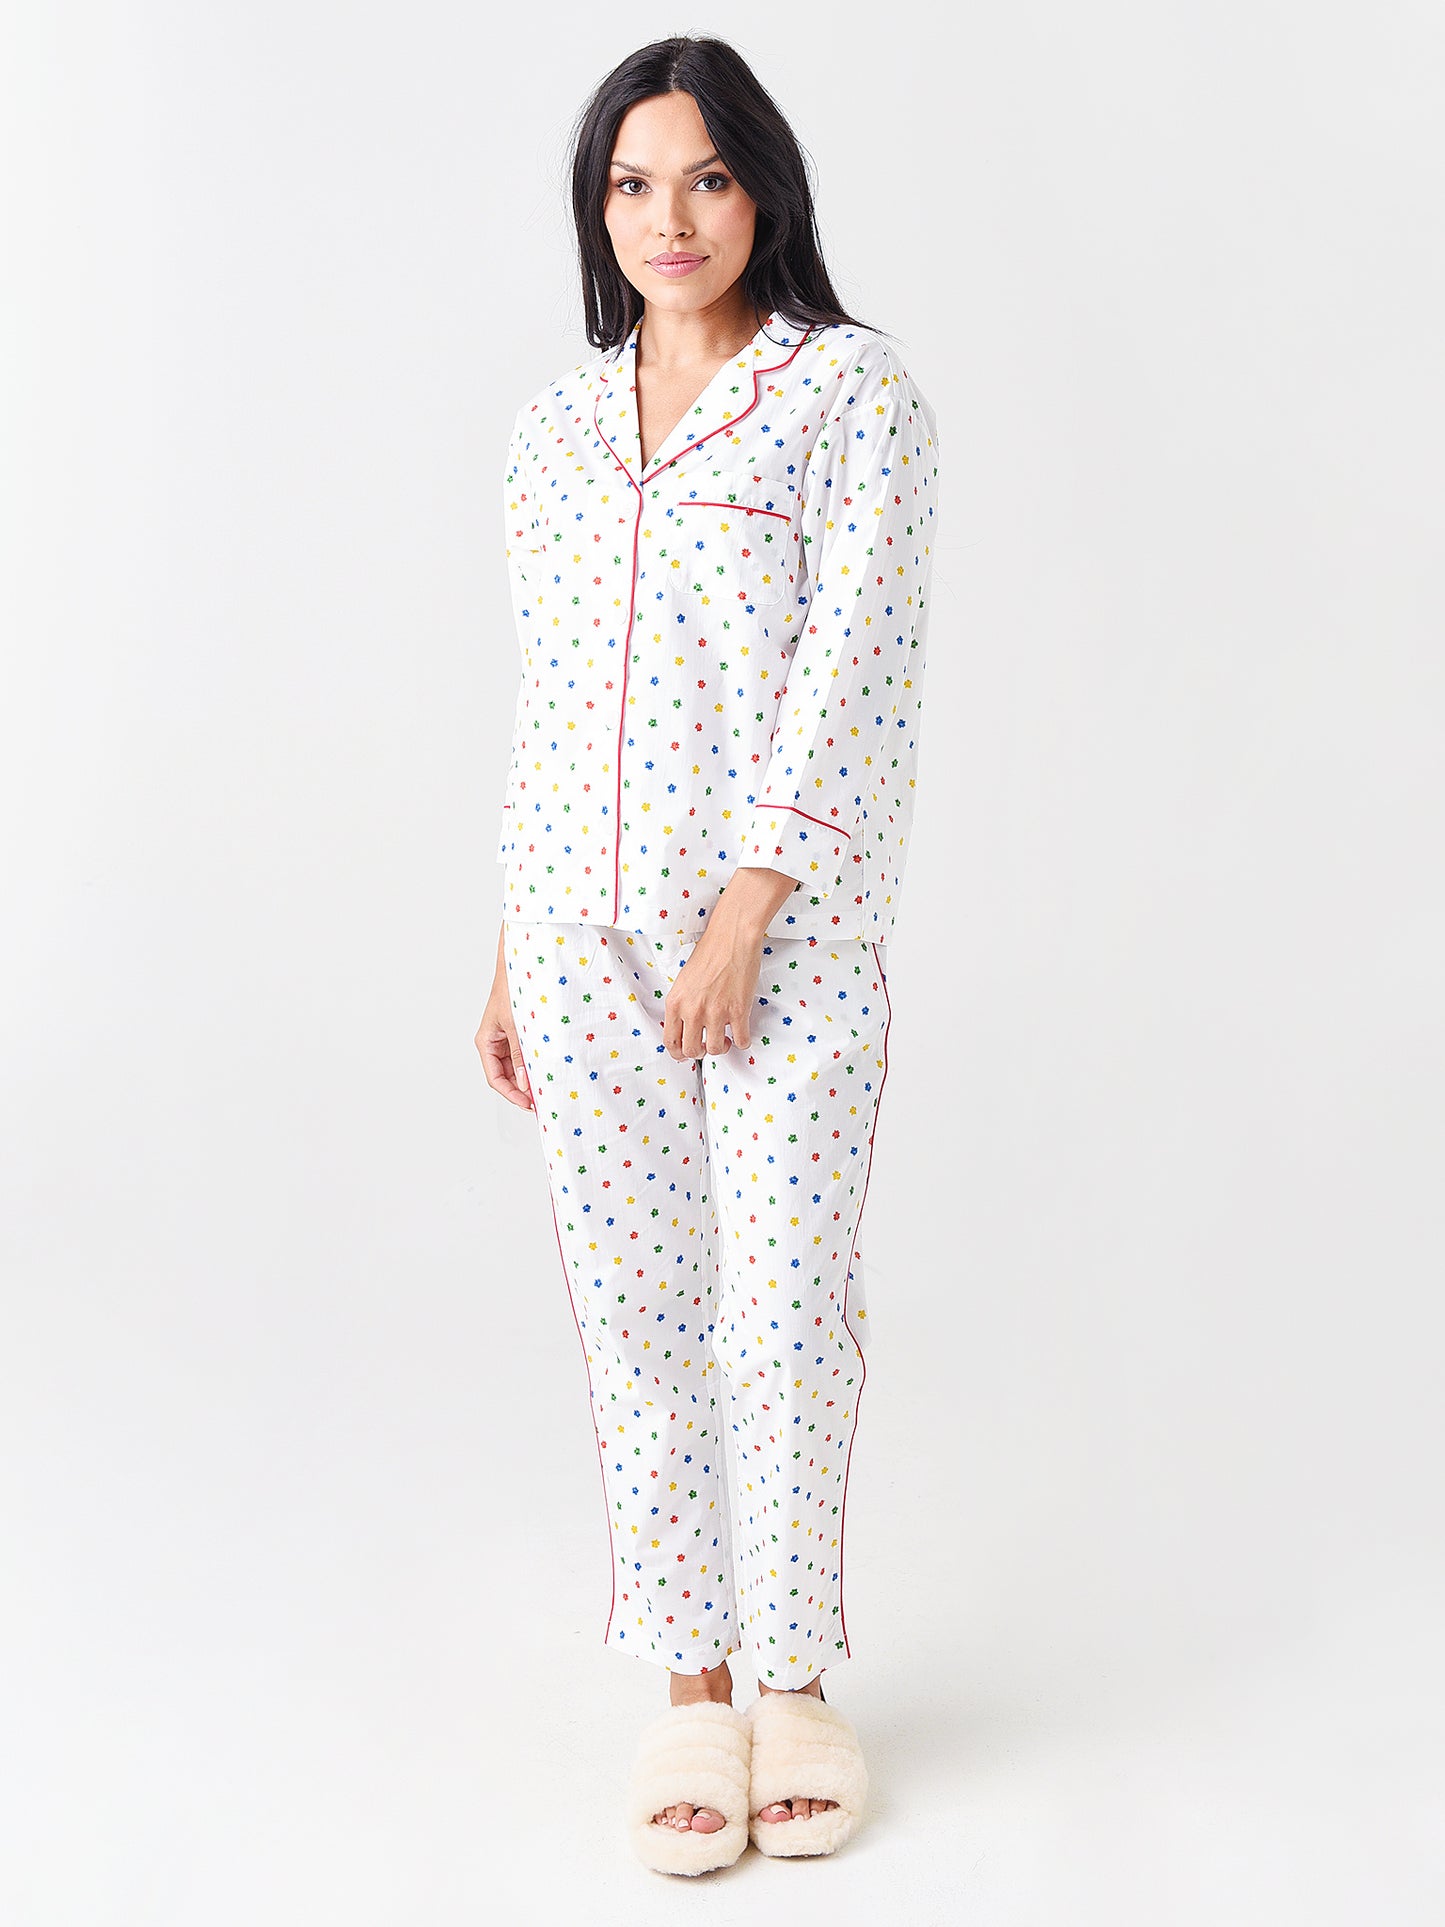 Sleepy Jones Women's Marina Pajama Set